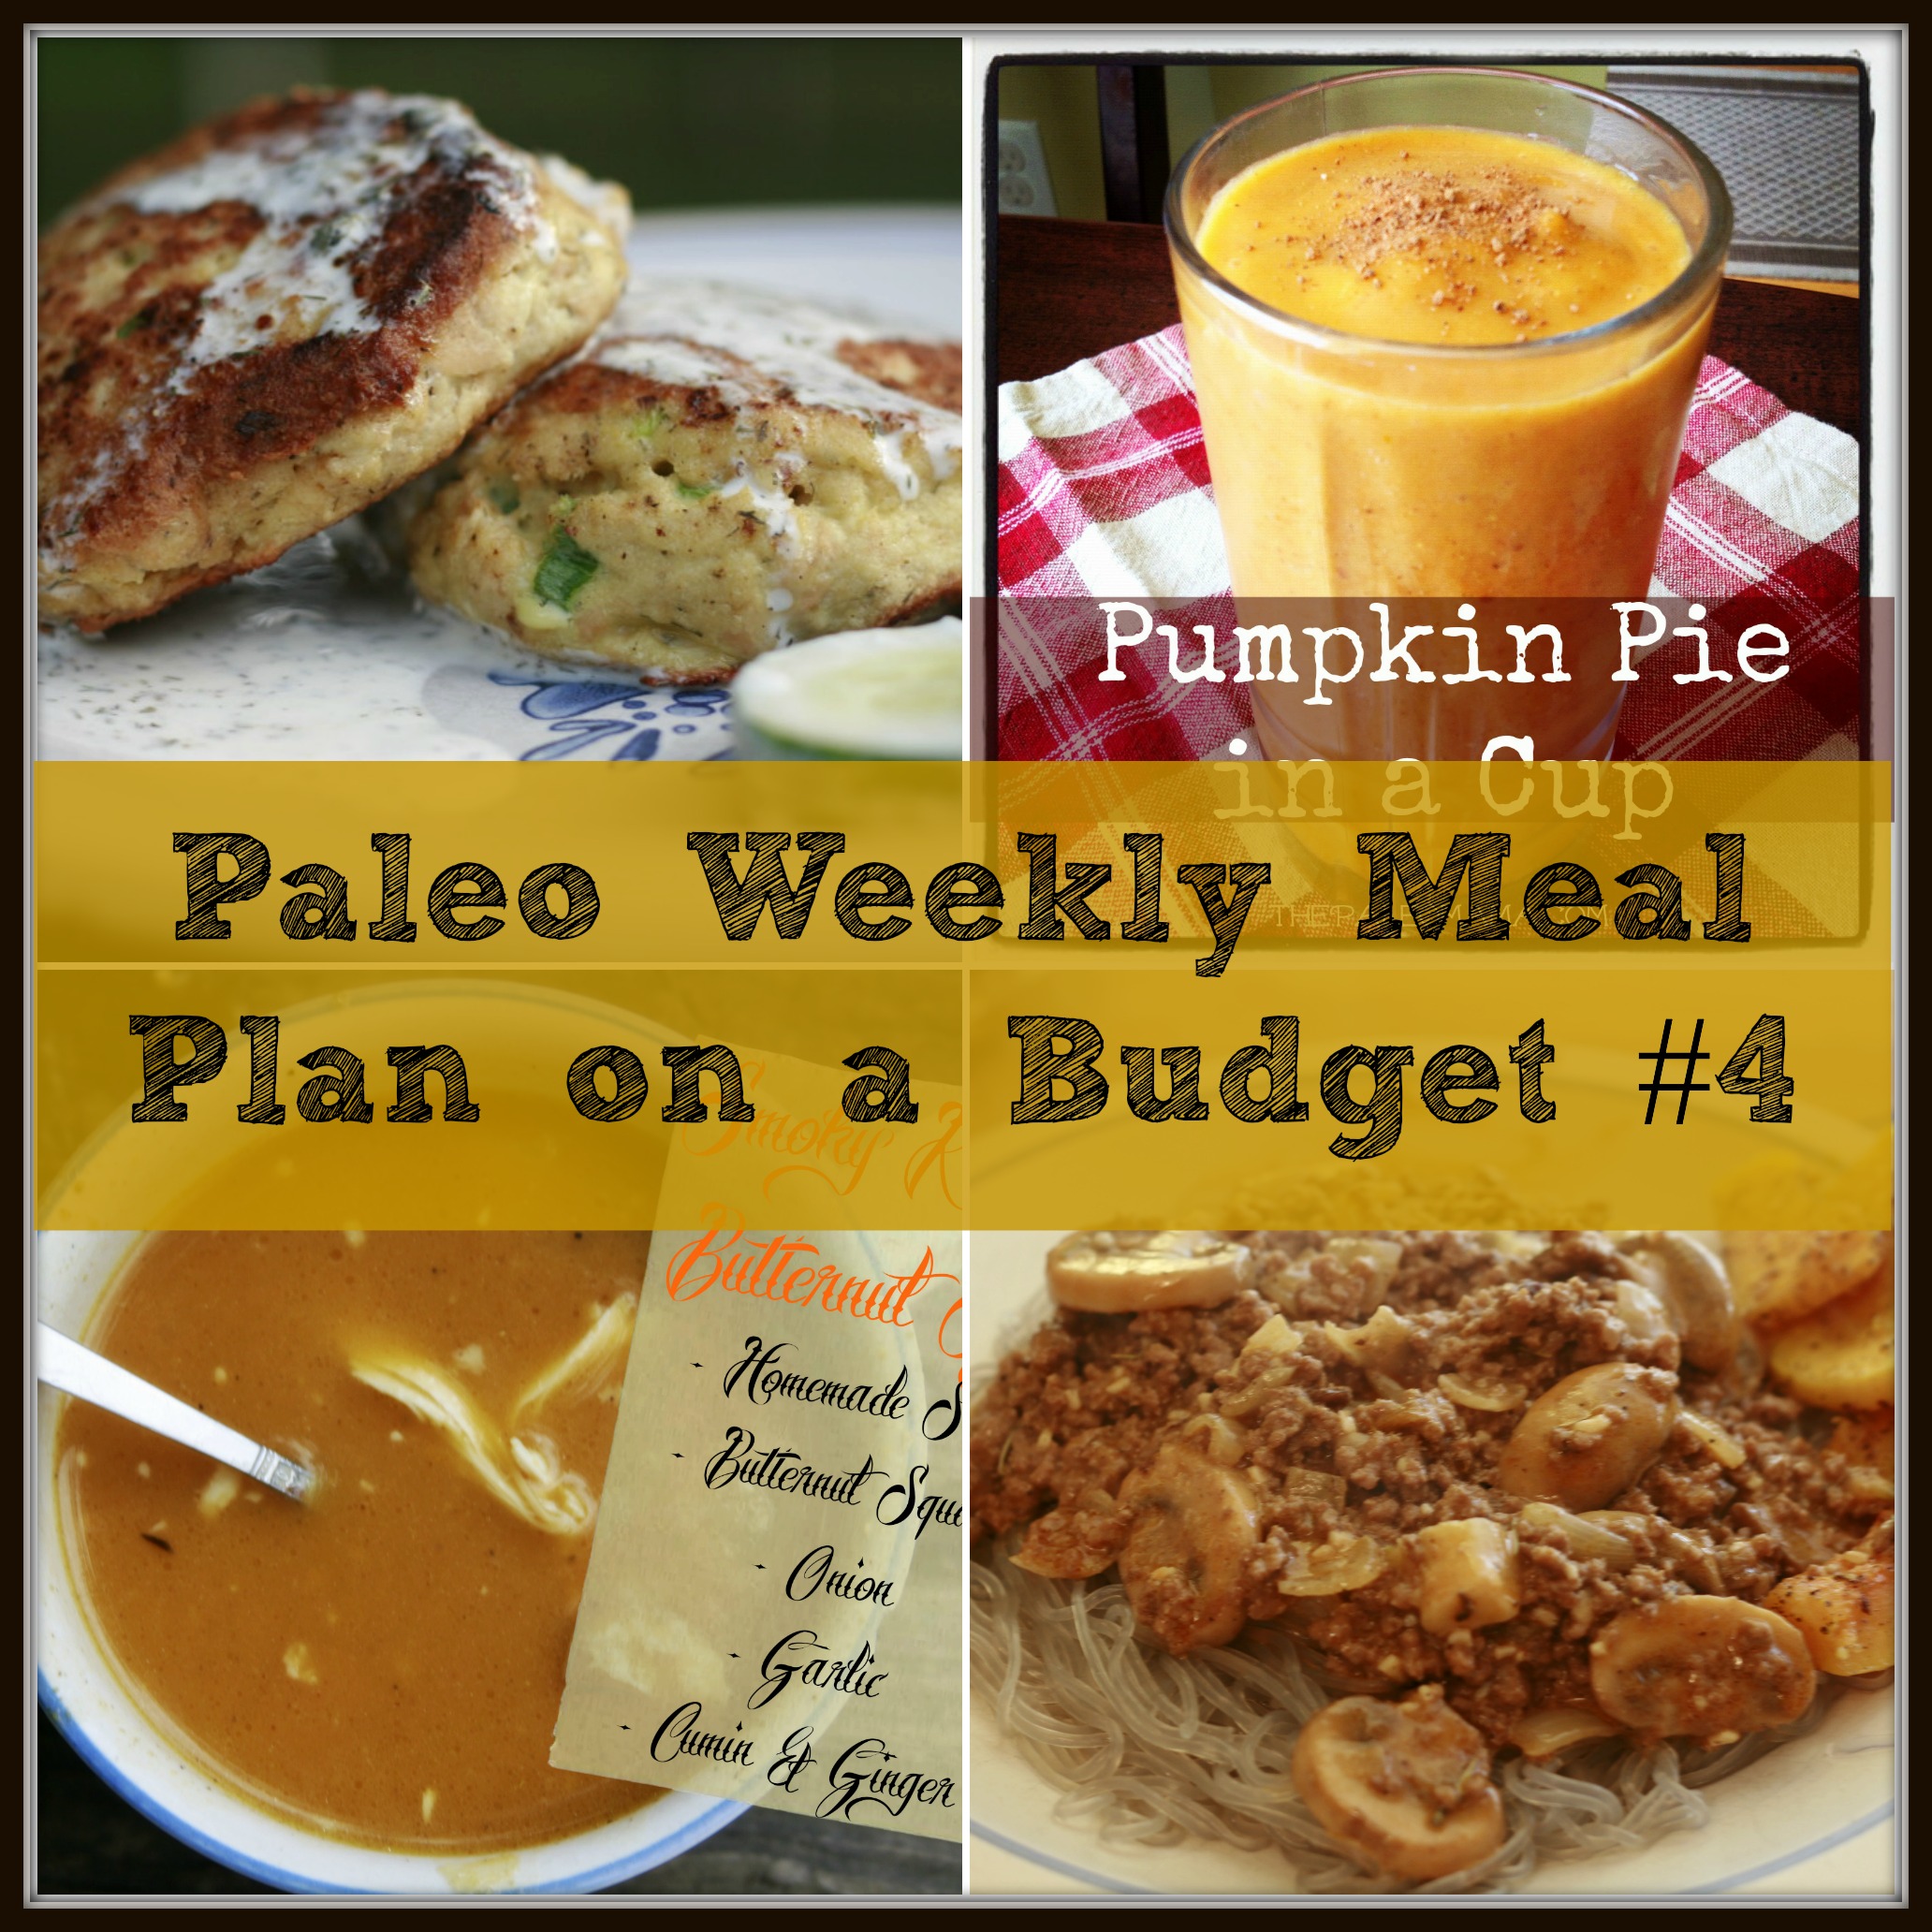 Paleo Weekly Meal Plan on a Budget #4 - The Paleo Mama